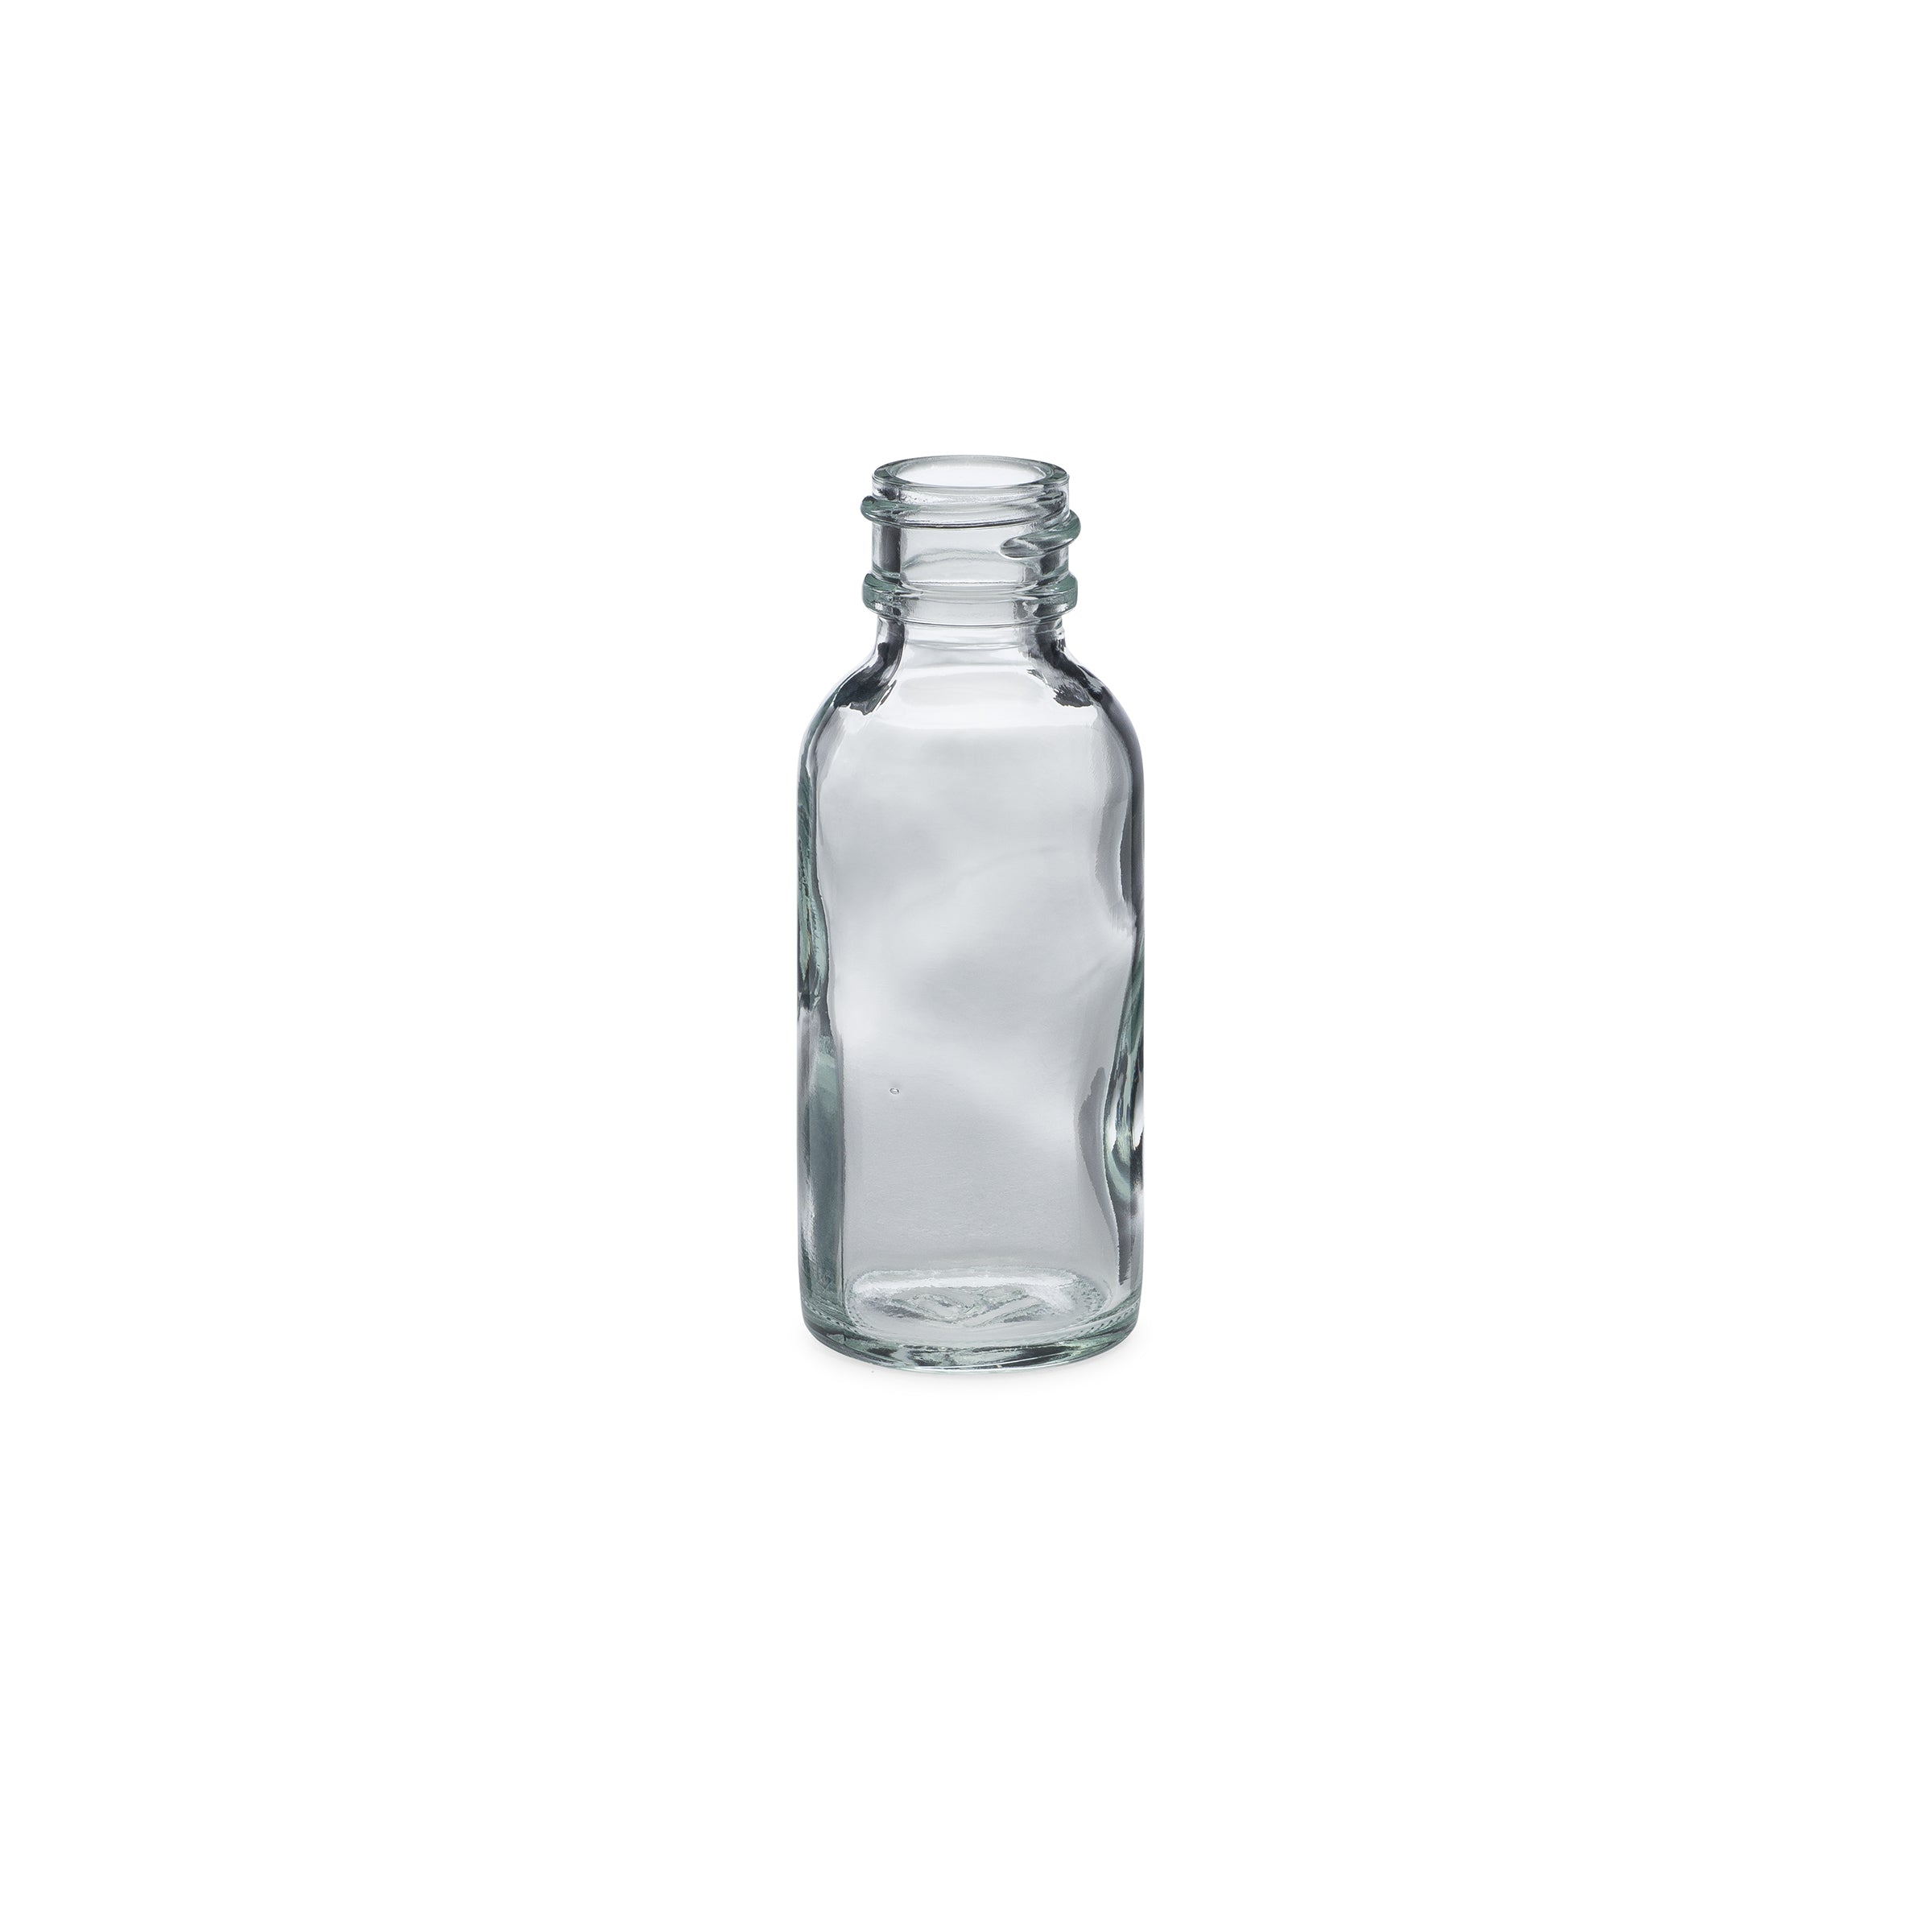 1oz/30ml Flint Boston Round Bottle